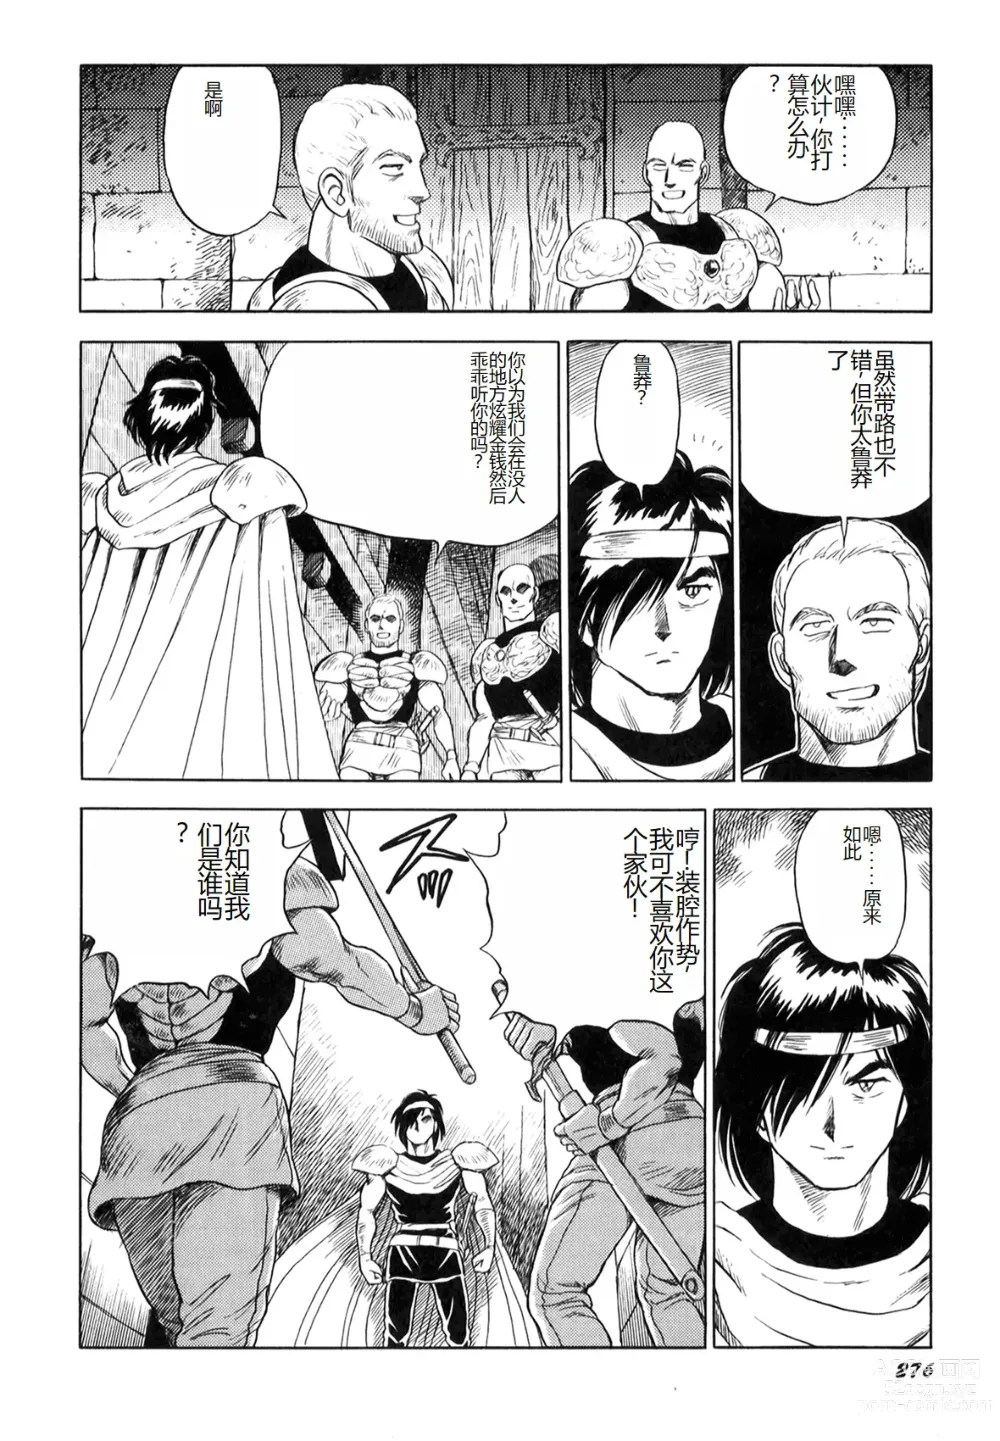 Page 277 of manga Dorei Senshi Maya I